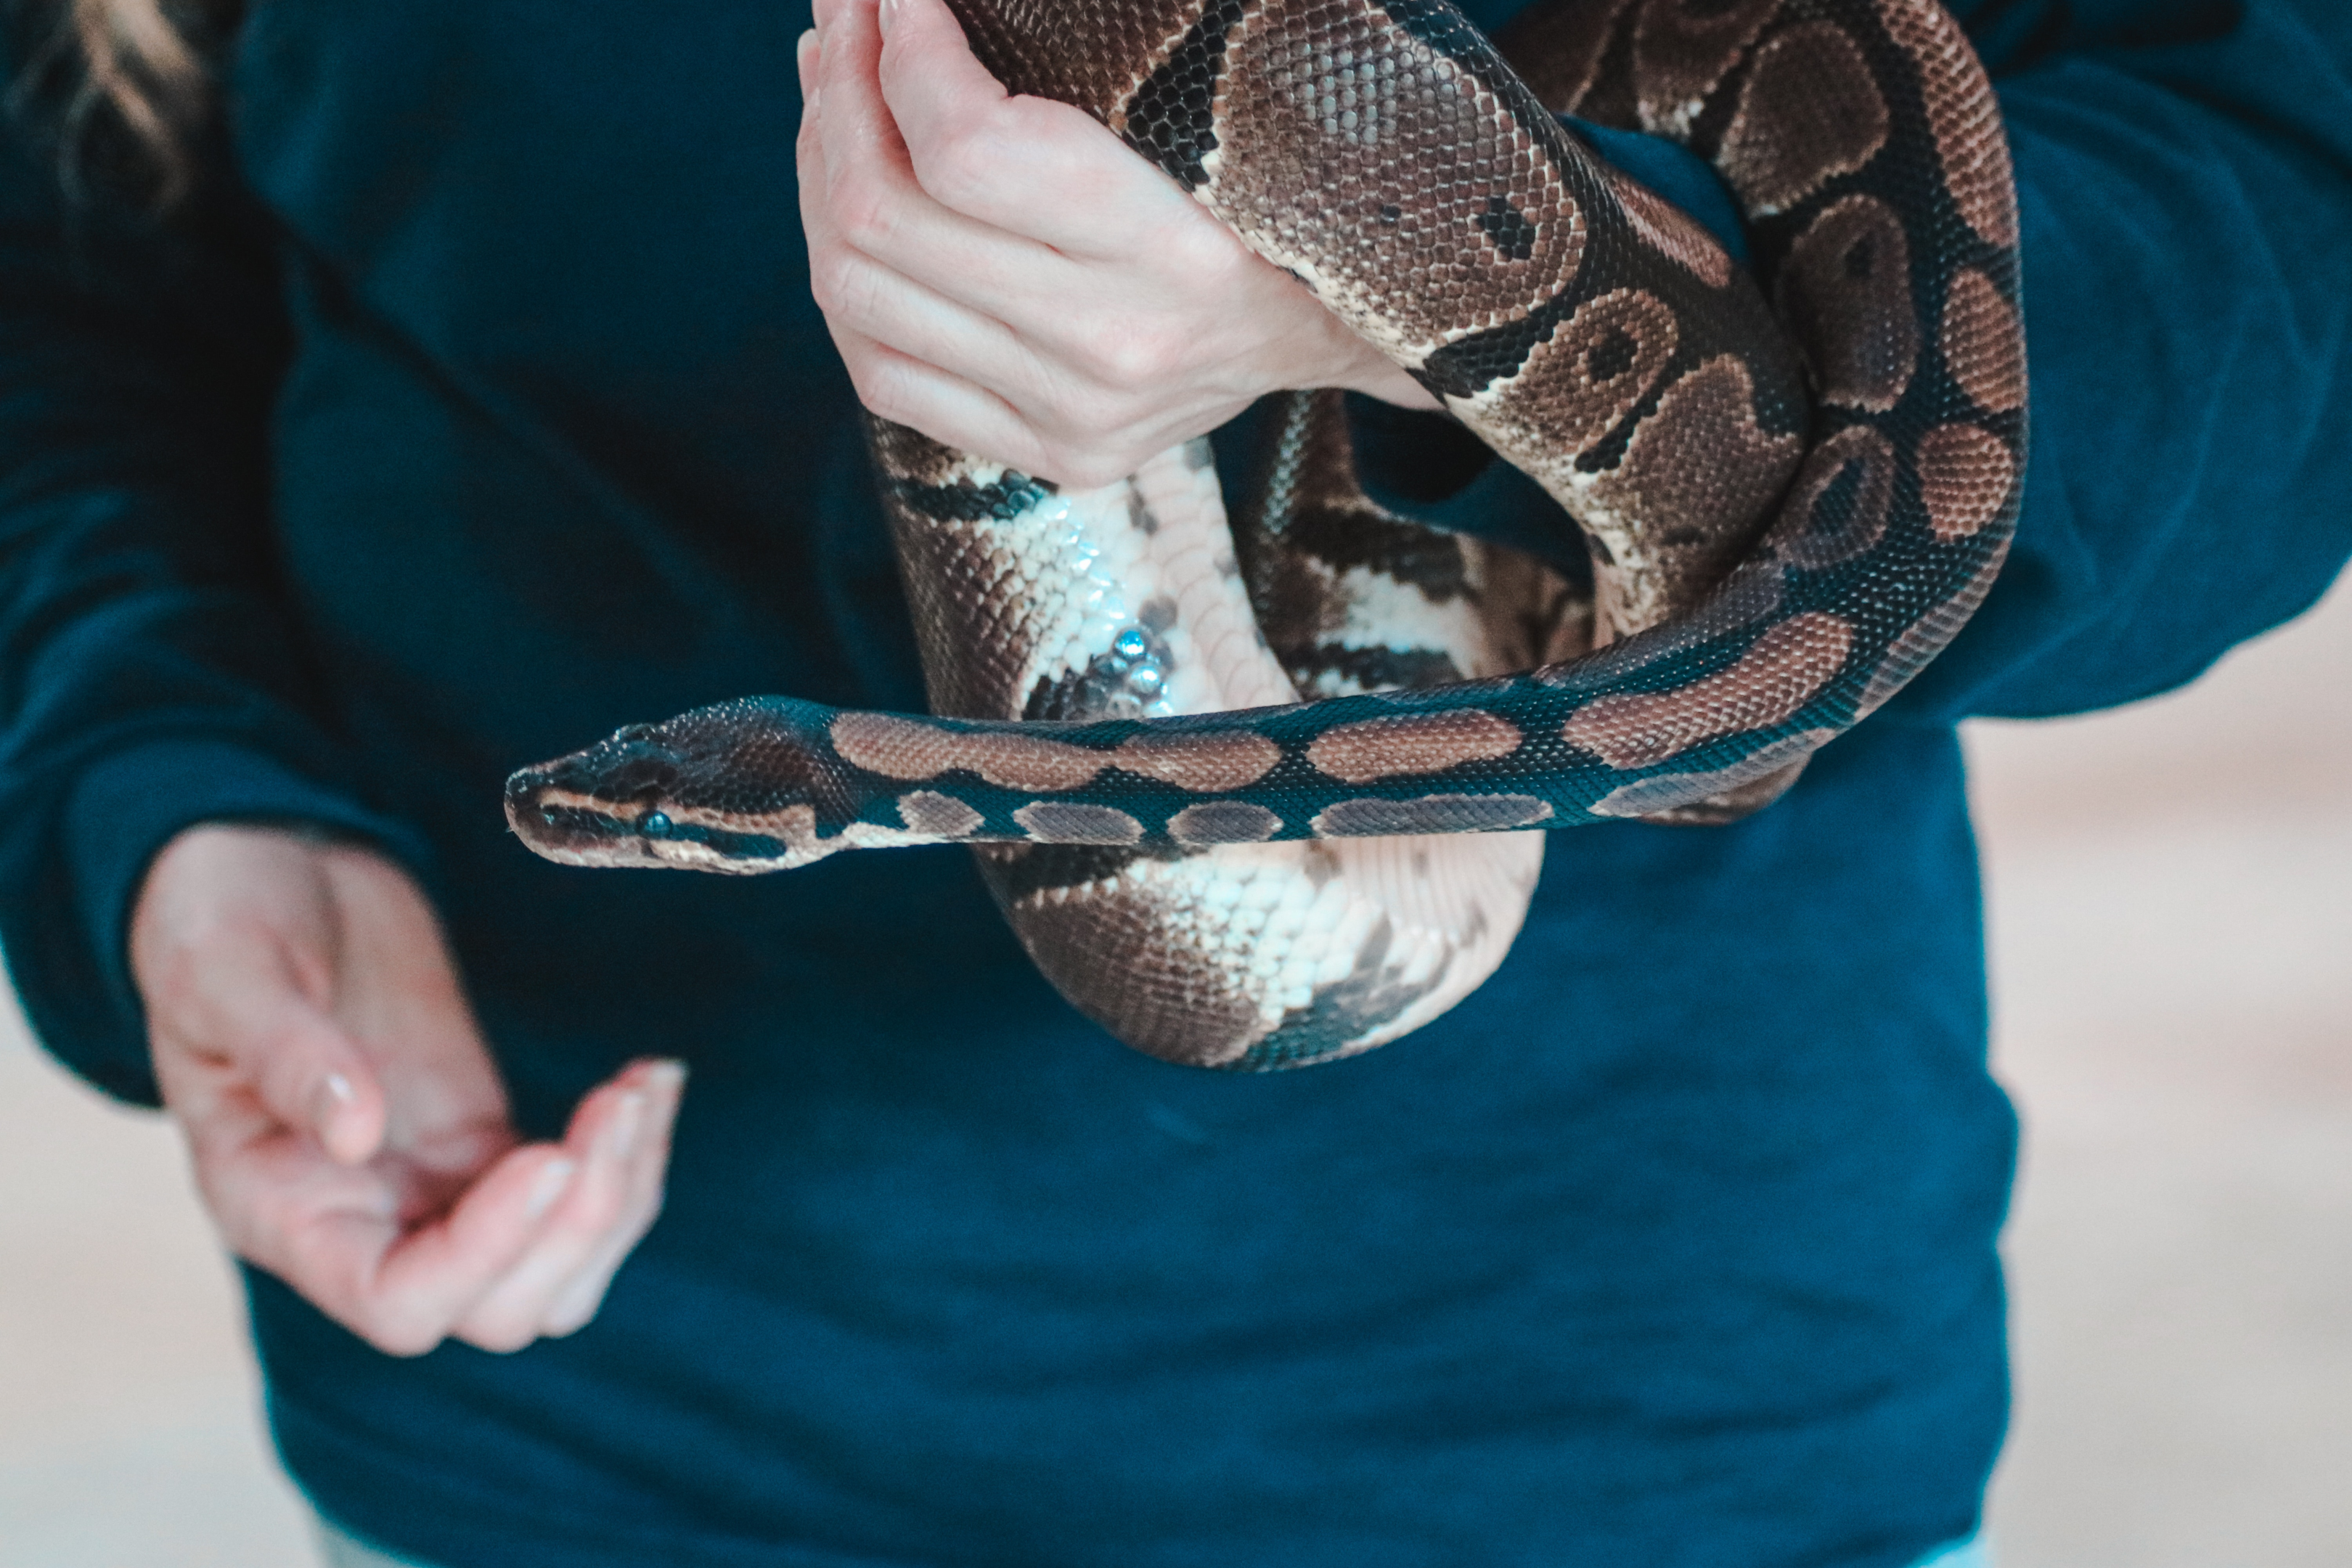 Pet owner holding a snake